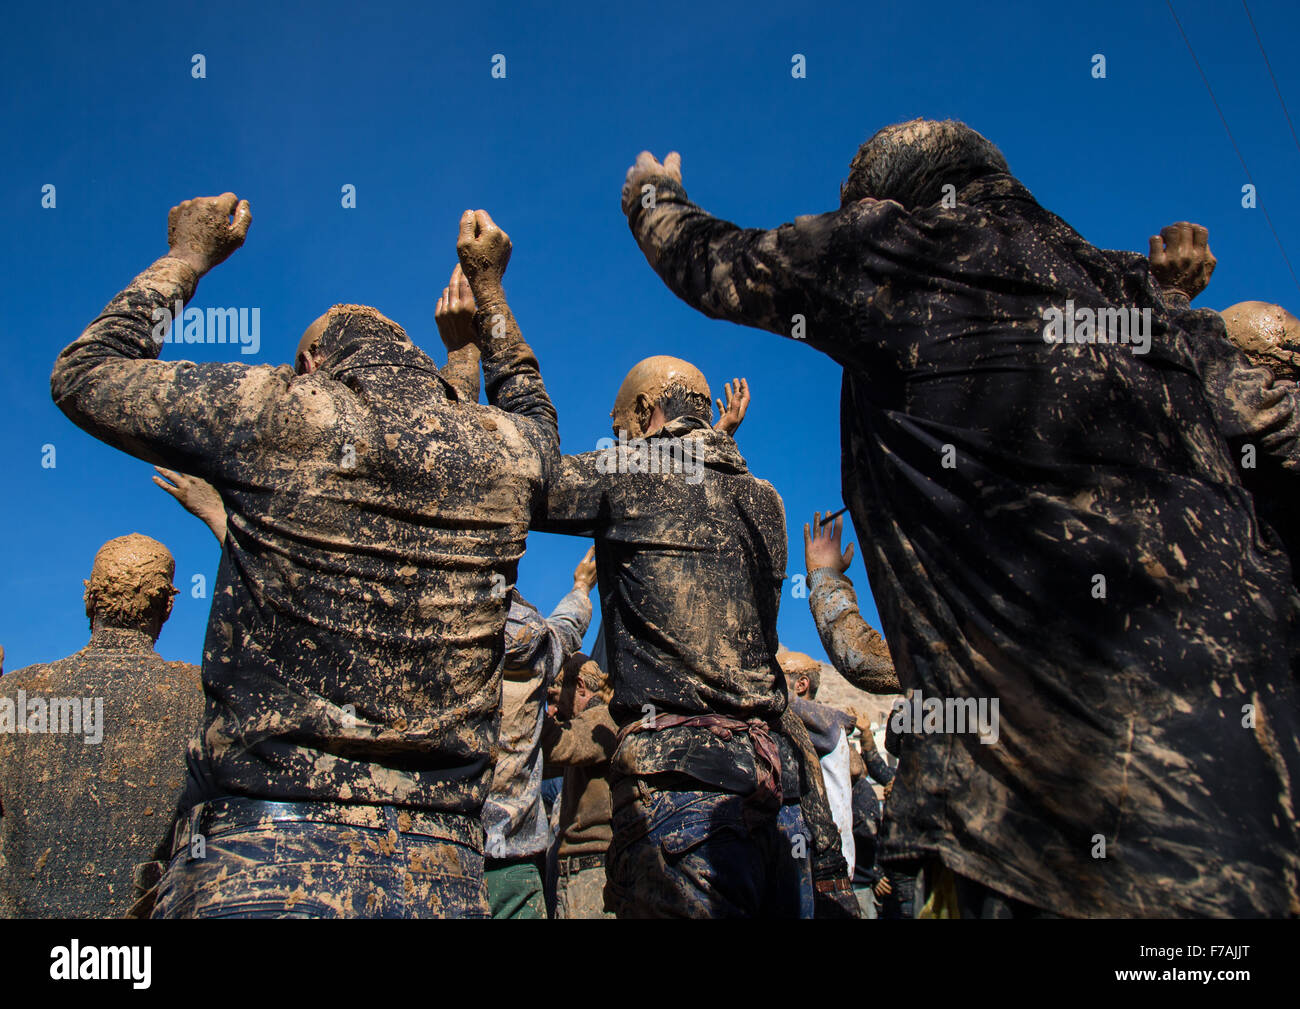 Iranian Shiite Muslim Men Covered In Mud, Chanting And Self-flagellating During Ashura, The Day Of The Death Of Imam Hussein, Kurdistan Province, Bijar, Iran Stock Photo